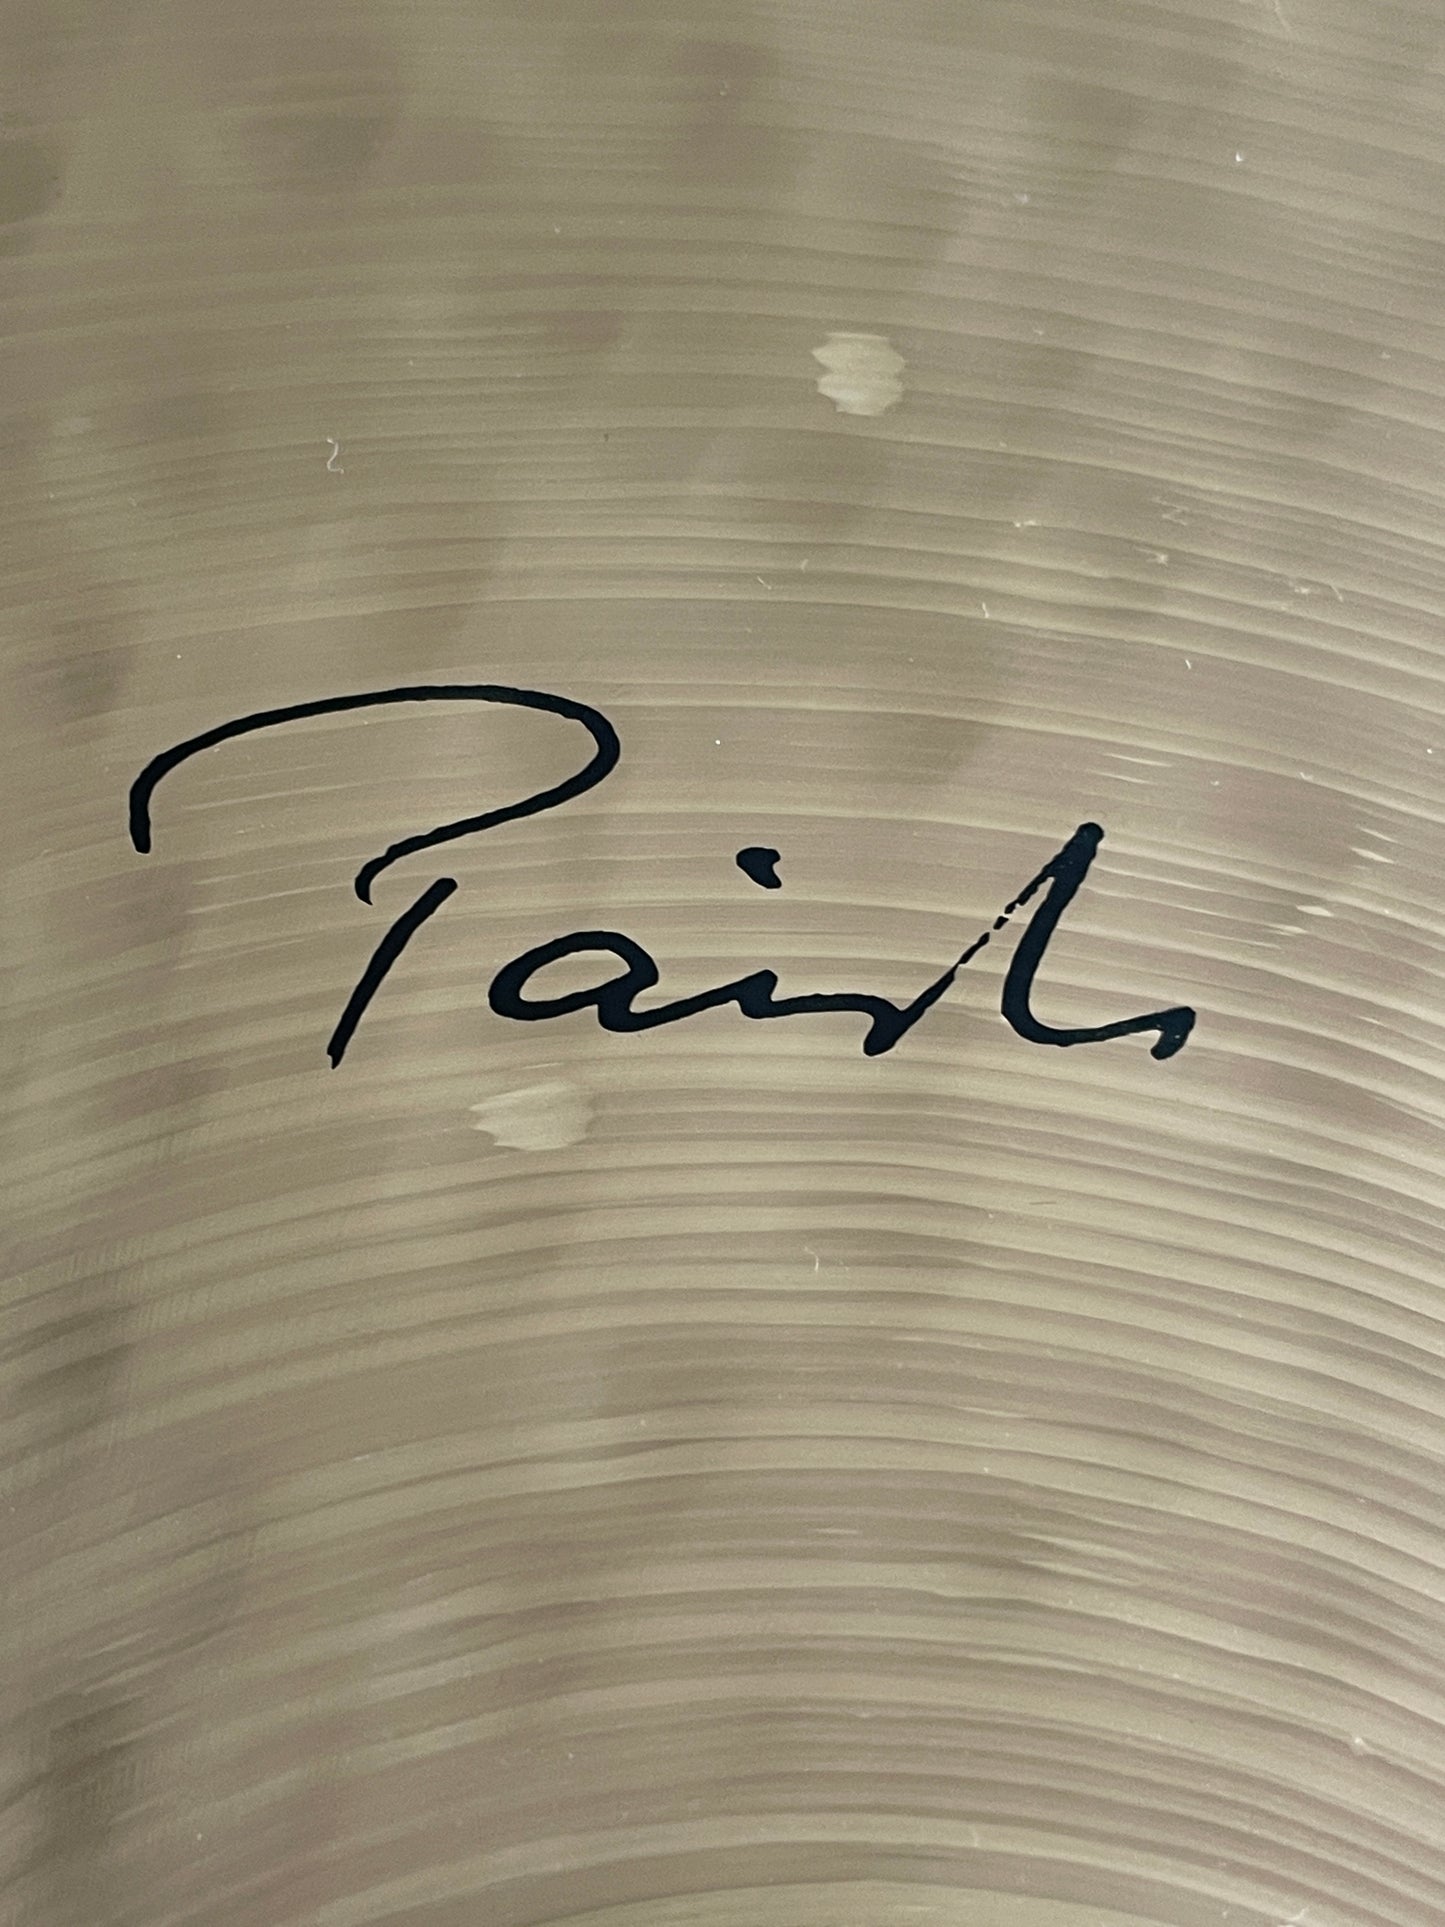 20" Paiste Signature Traditional Medium Heavy Ride Cymbal 2430g